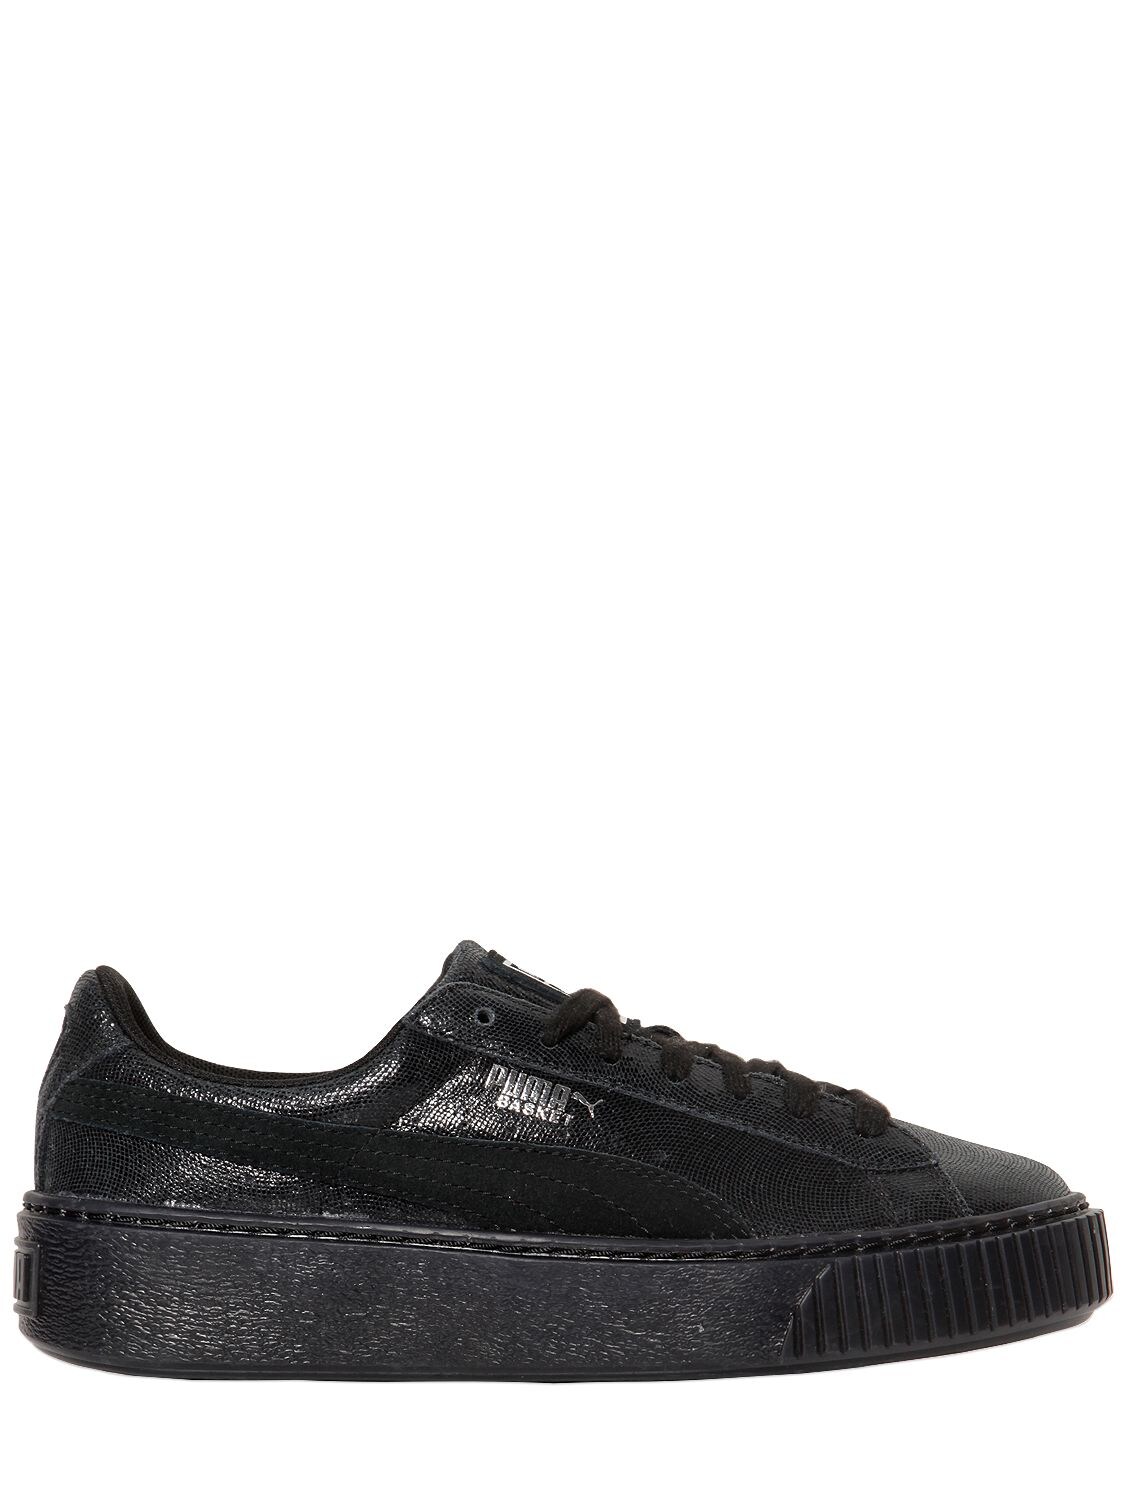 Puma Basket Platform Leather Sneakers In Black